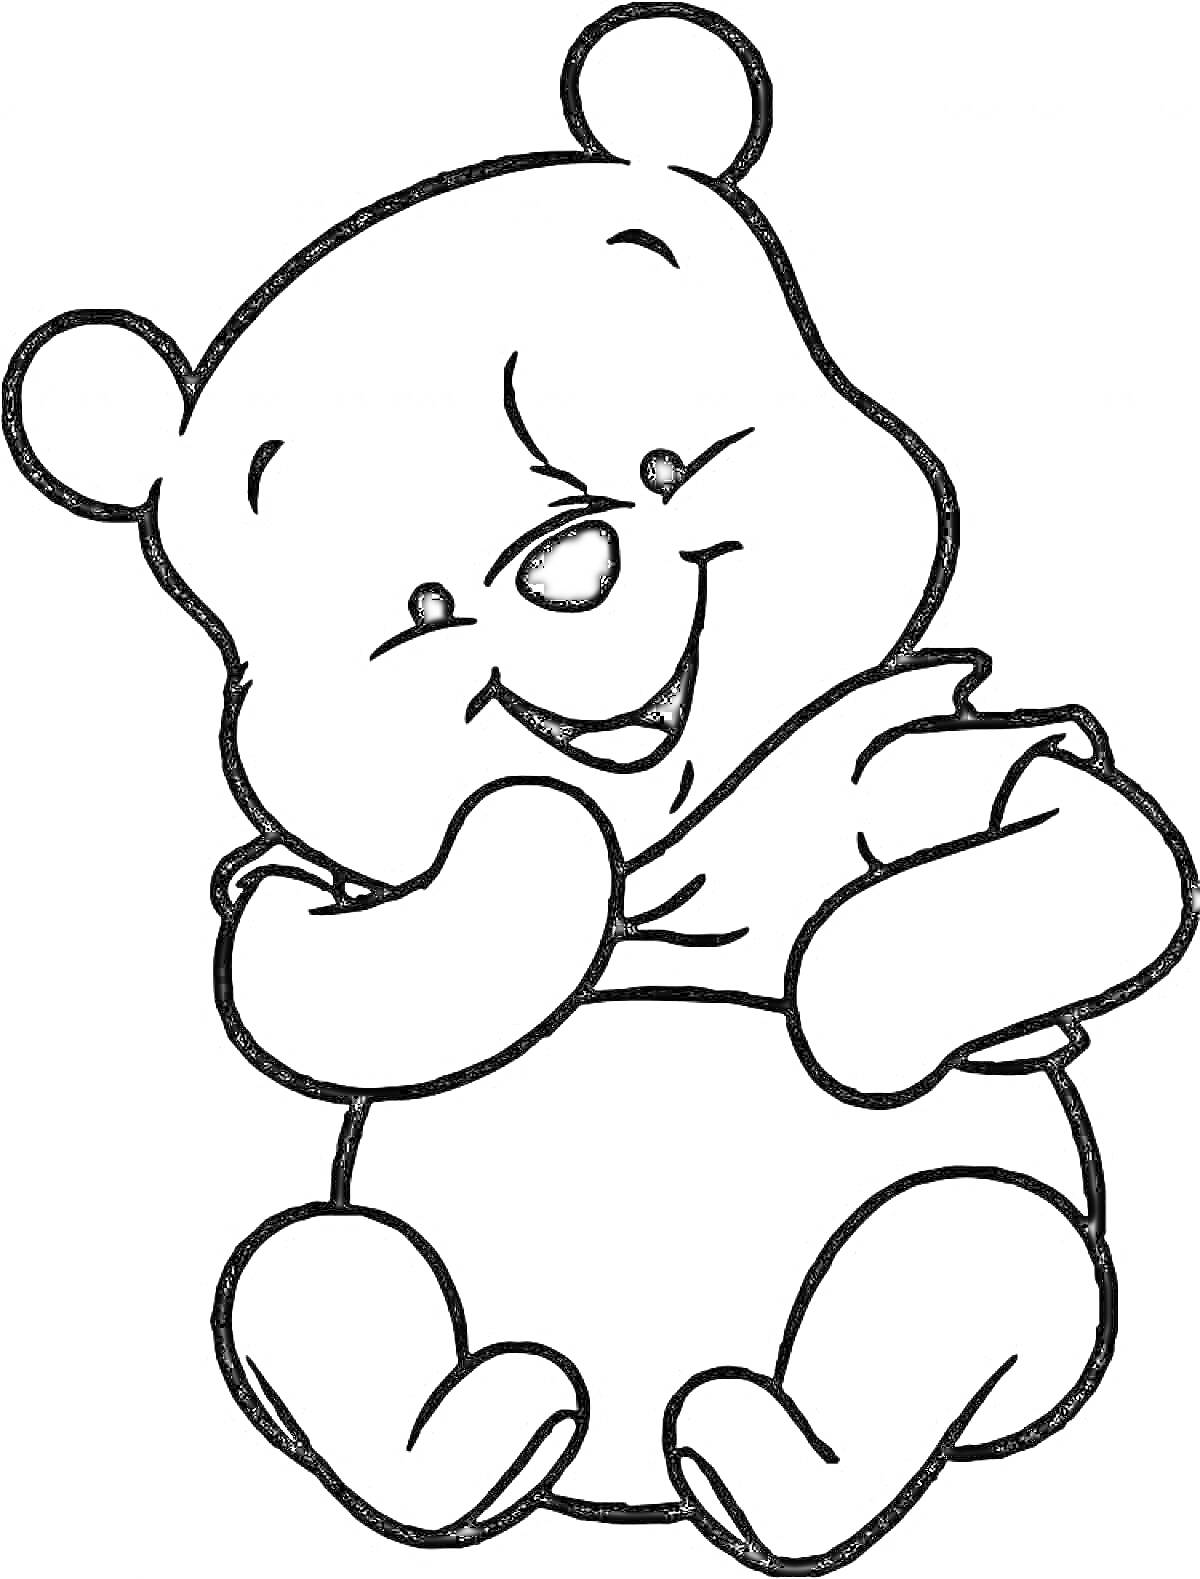 Раскраска Медвежонок с улыбкой, в футболке, с лапами возле рта